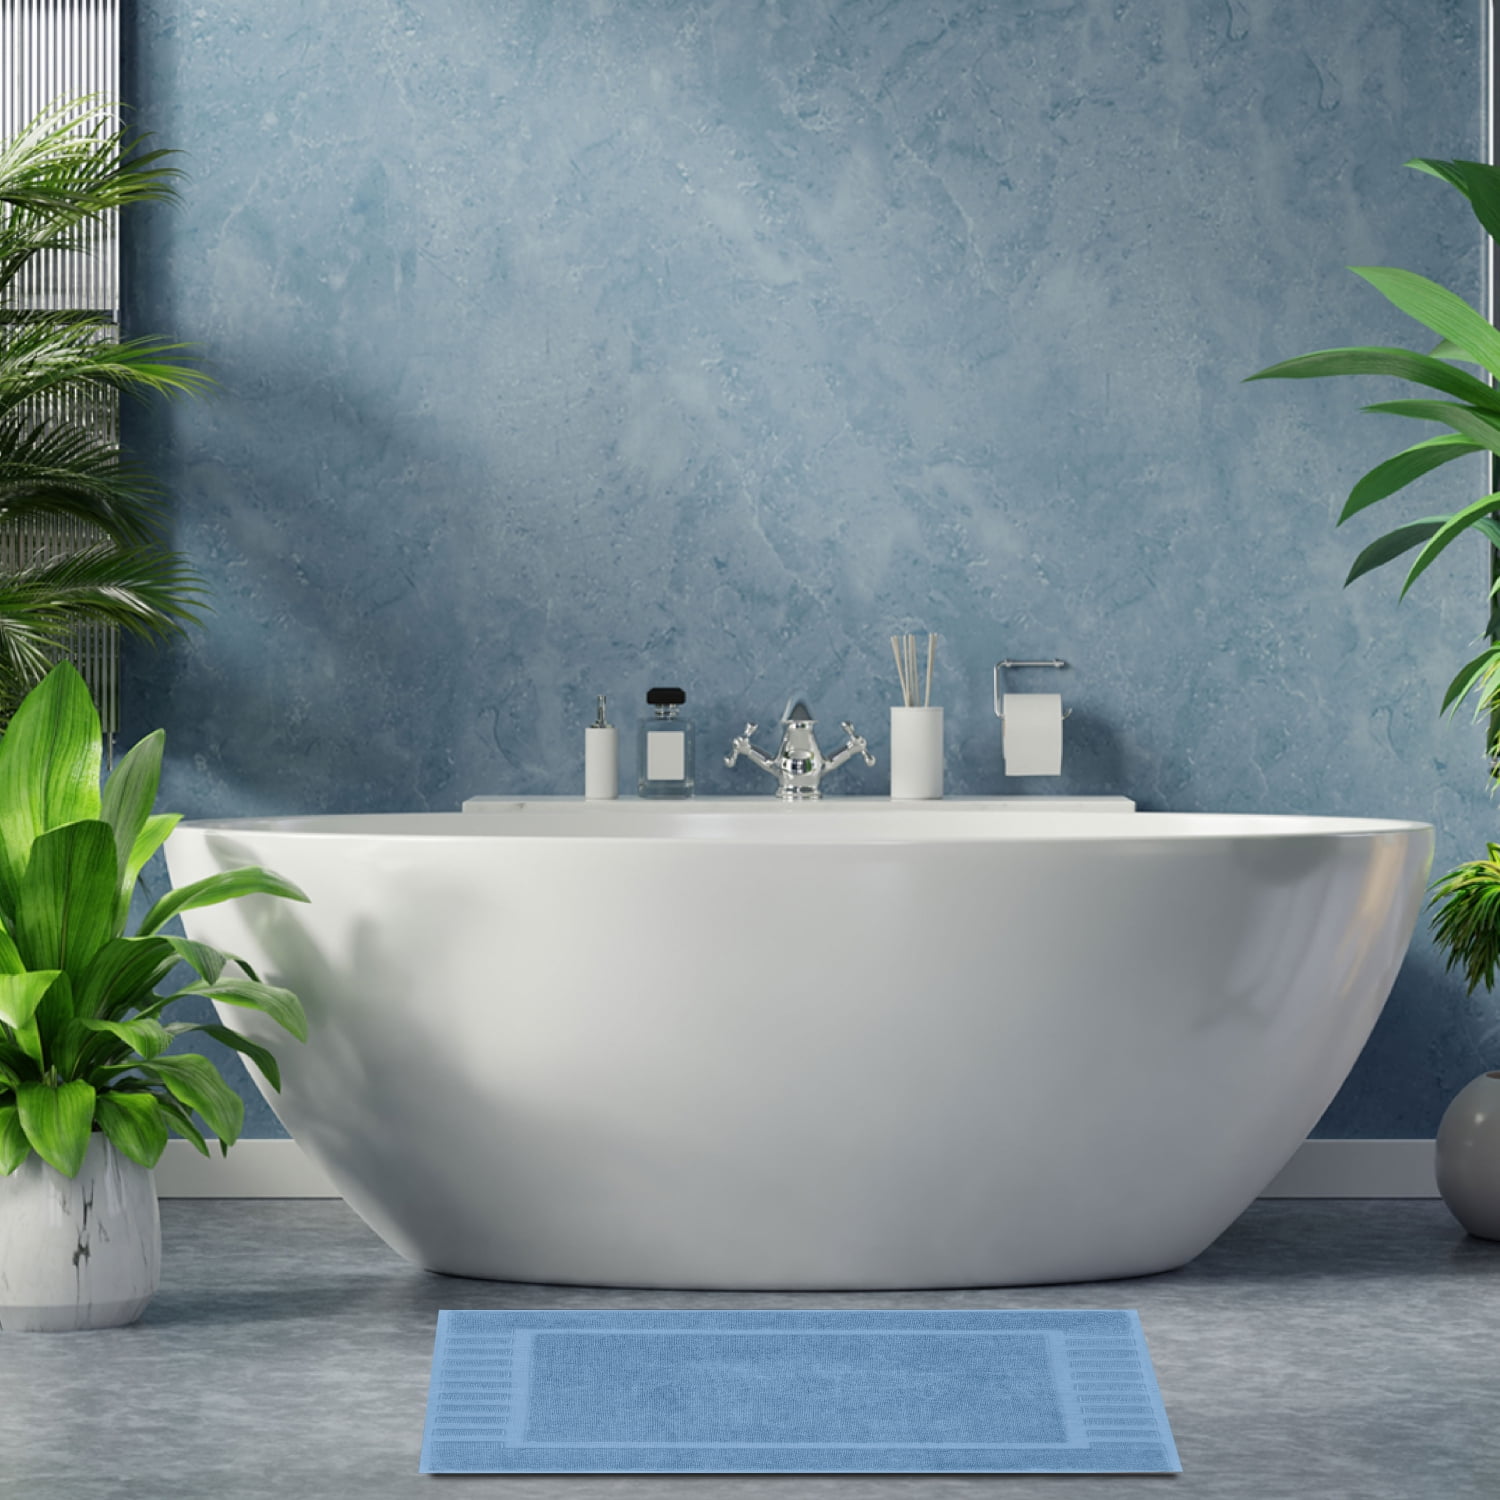 ALIBI Bath Mat Floor Towel Set , 2 Pack of Super Soft & Absorbent Luxury  Cotton Towels , Hotel, Spa, Shower & Bathroom Step Out of Tub Floor Mats  [NOT a Bathroom